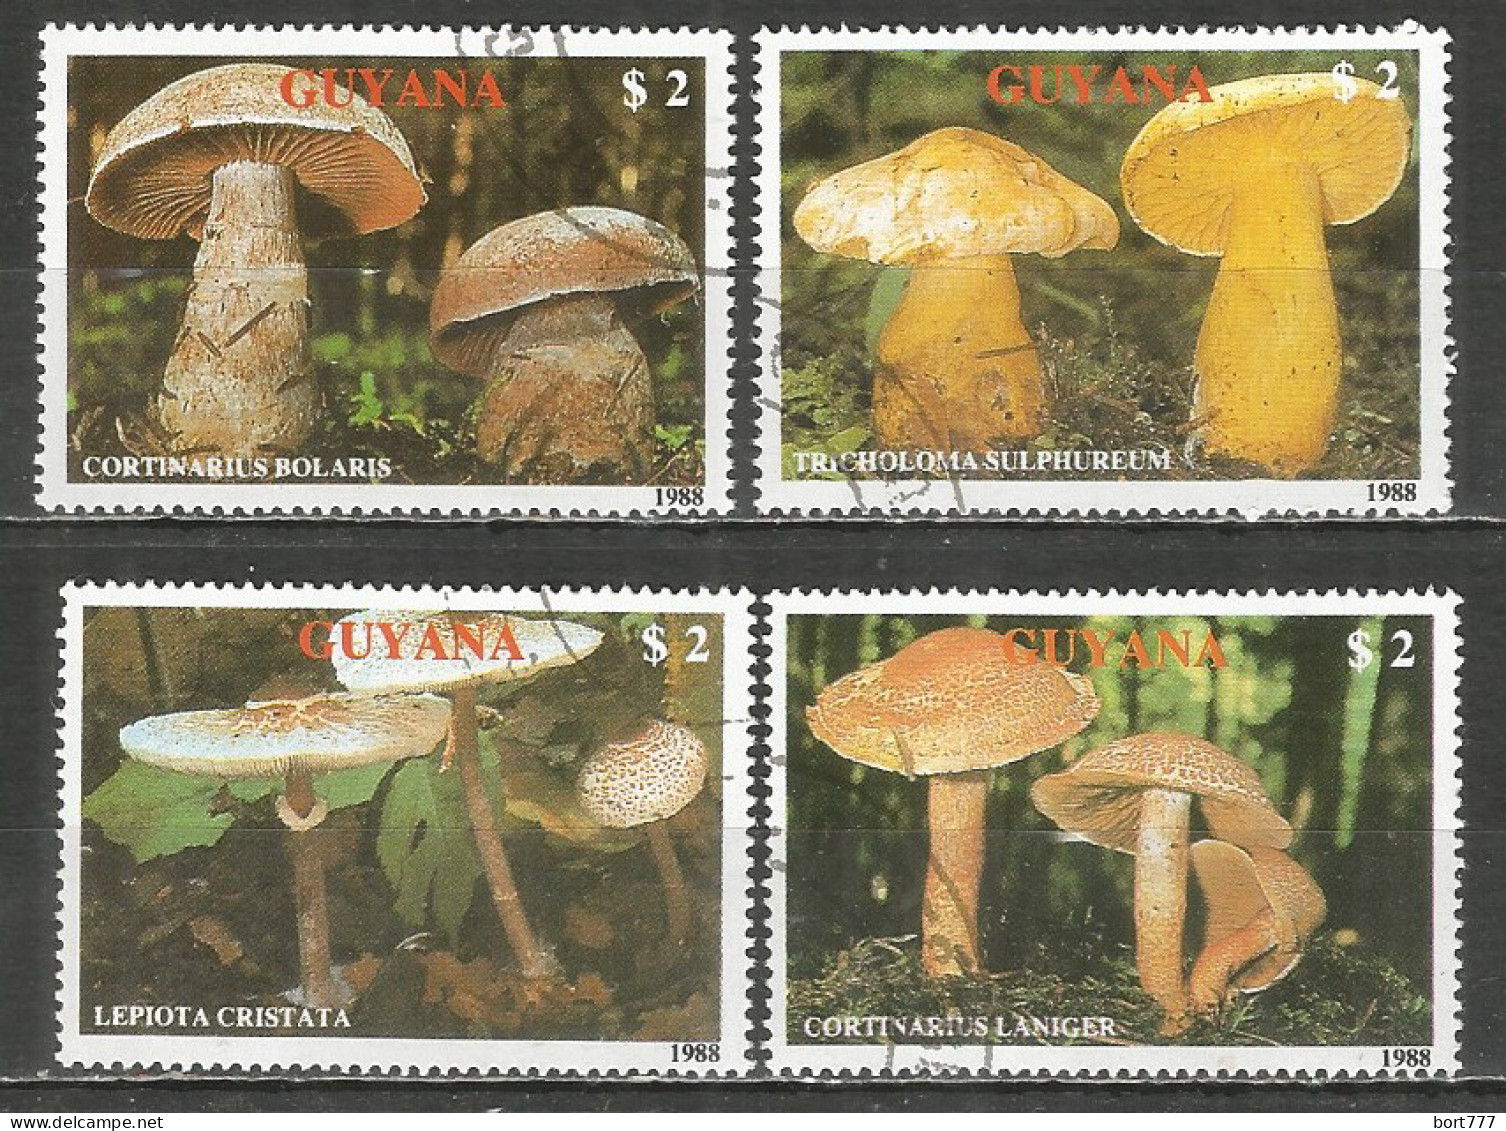 Guyana 1989 Used CTO Stamps Set Mushrooms - Guyana (1966-...)